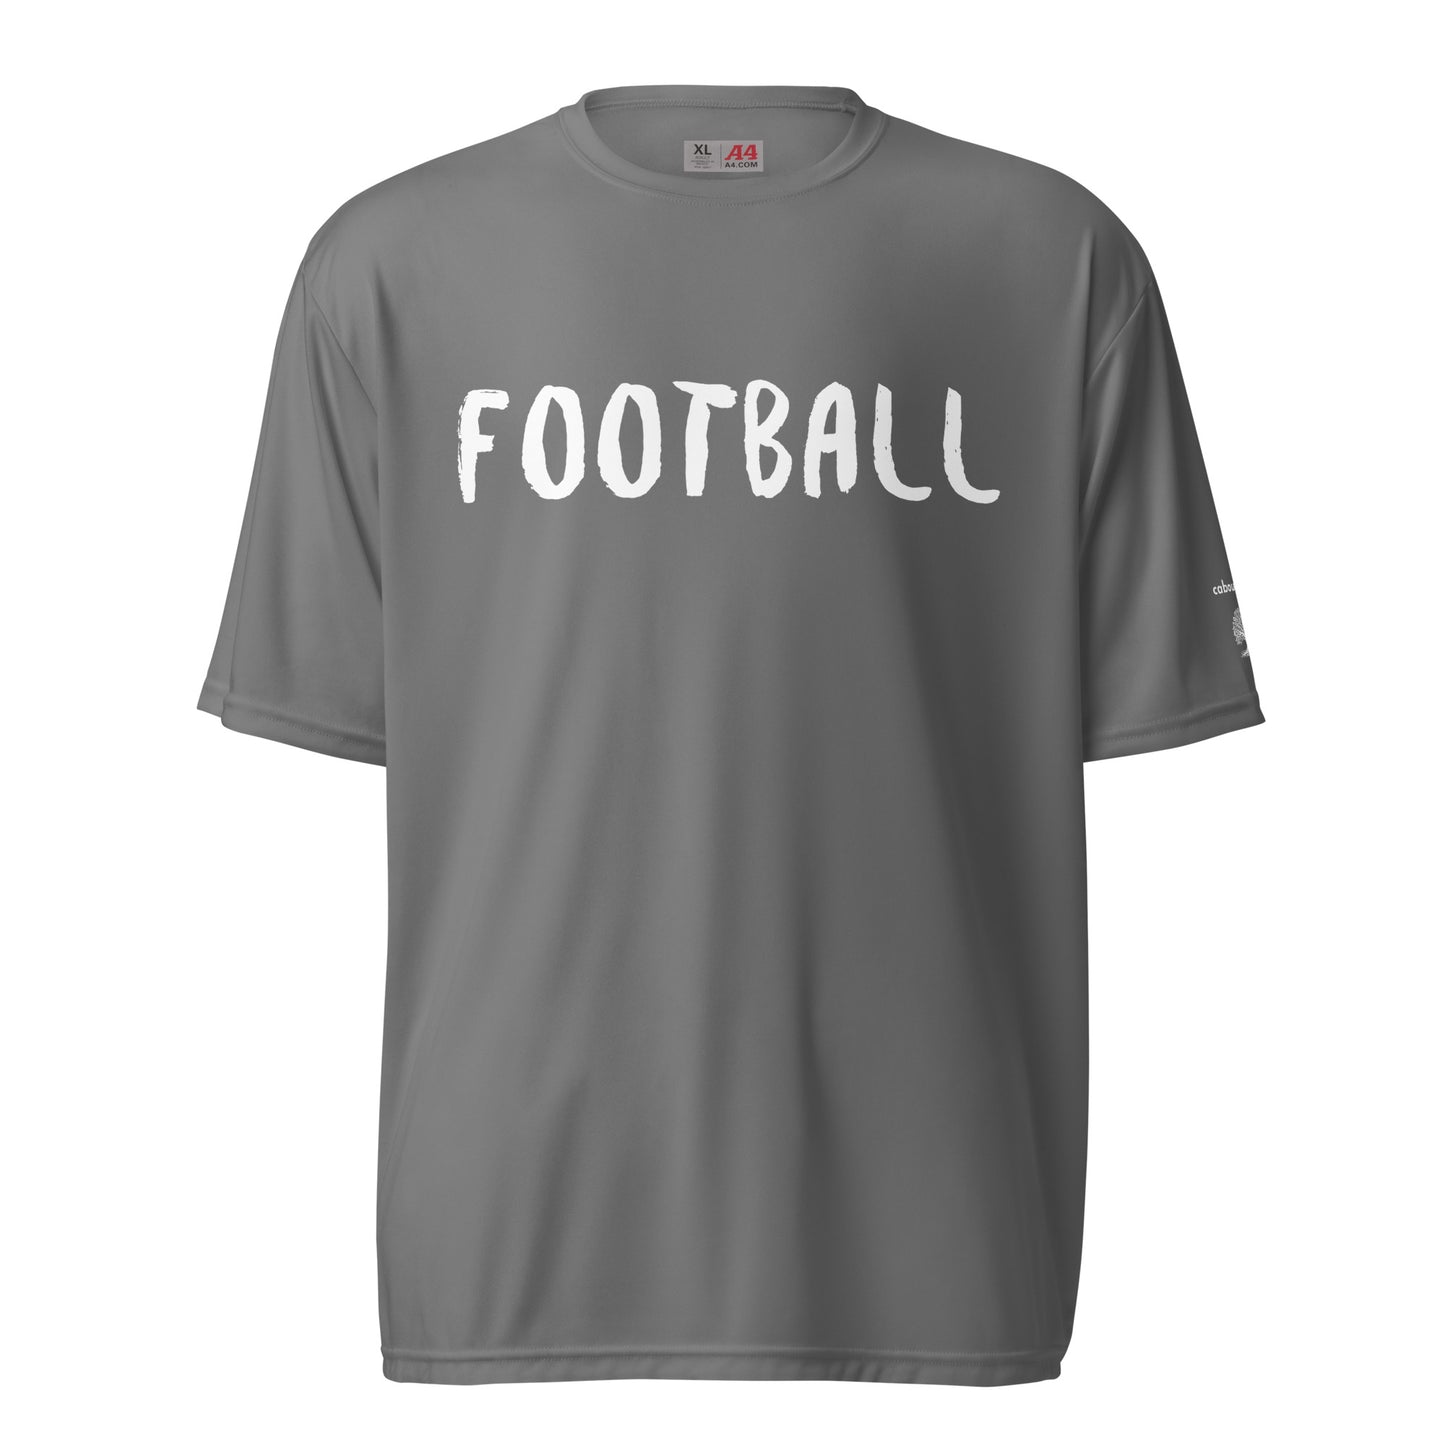 Unisex performance crew neck t-shirt - Football